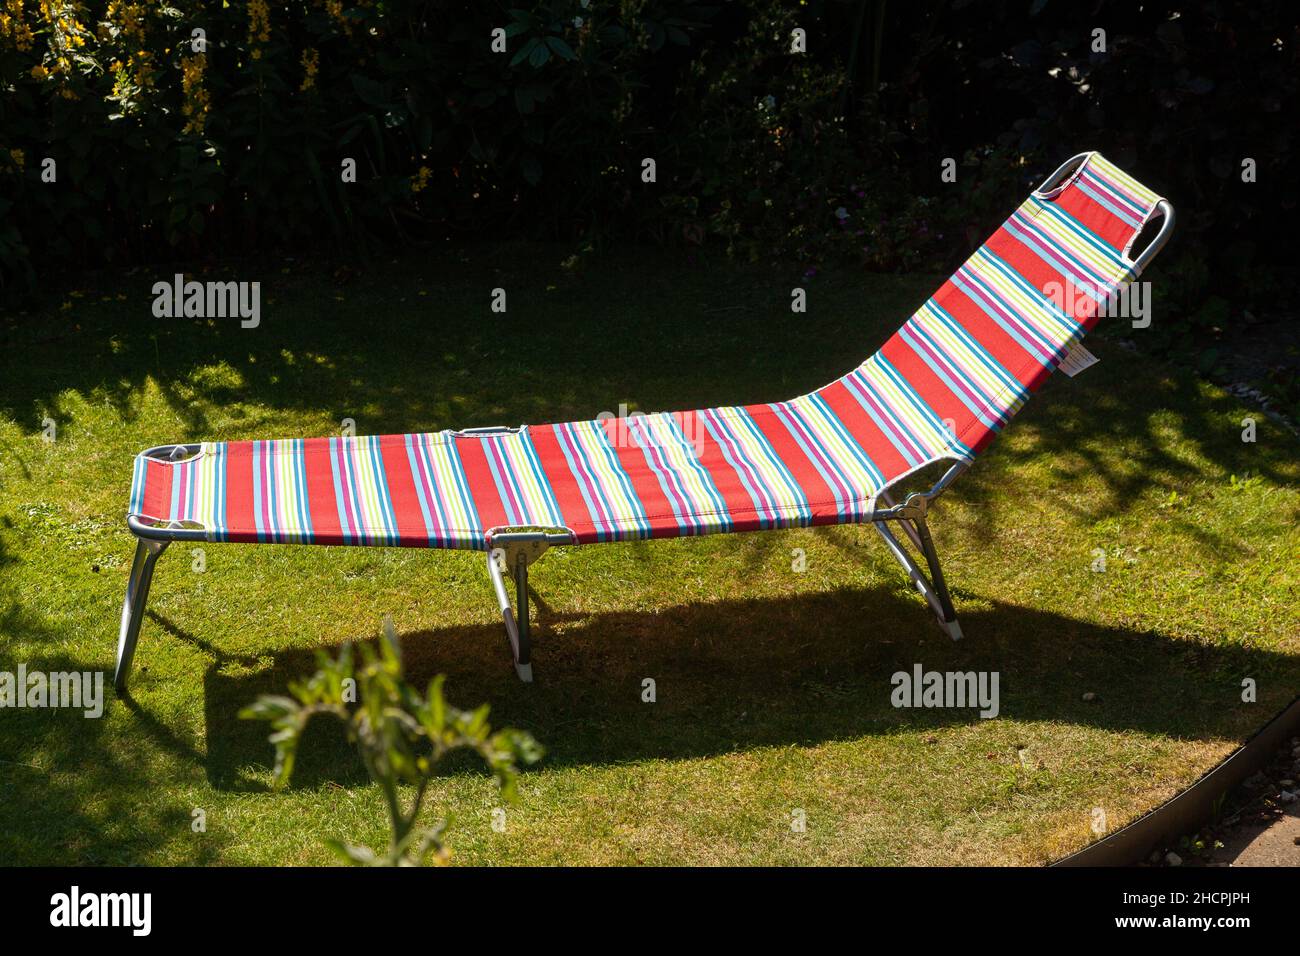 A folding sun lounger on grass in a back garden Stock Photo